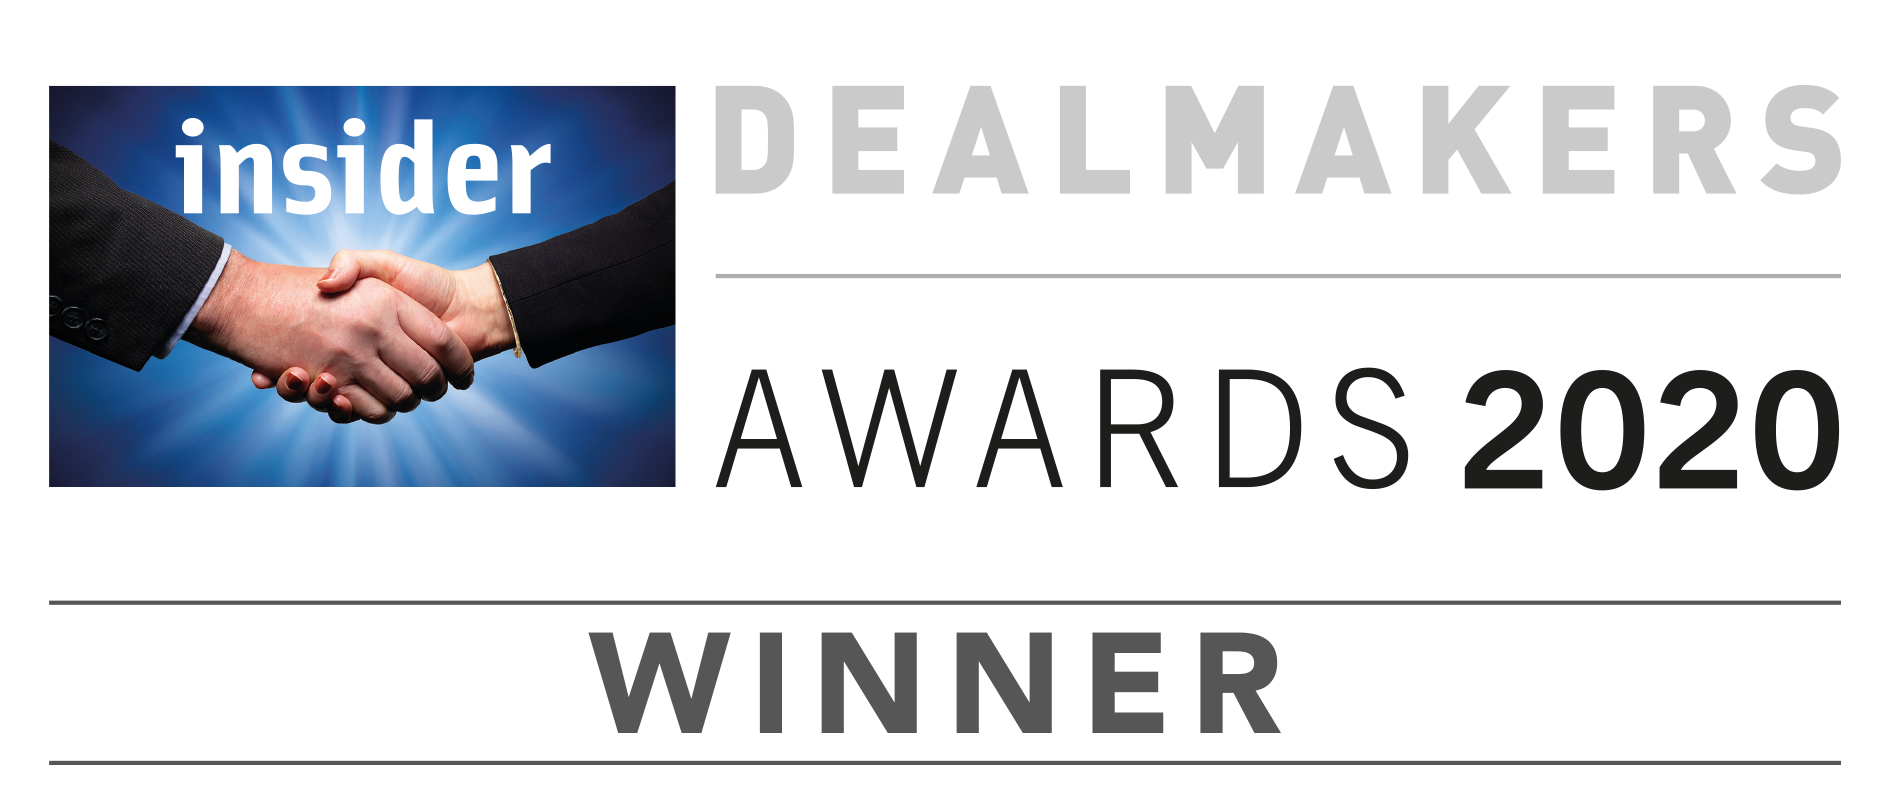 Dealmakers Awards 2020 Winner